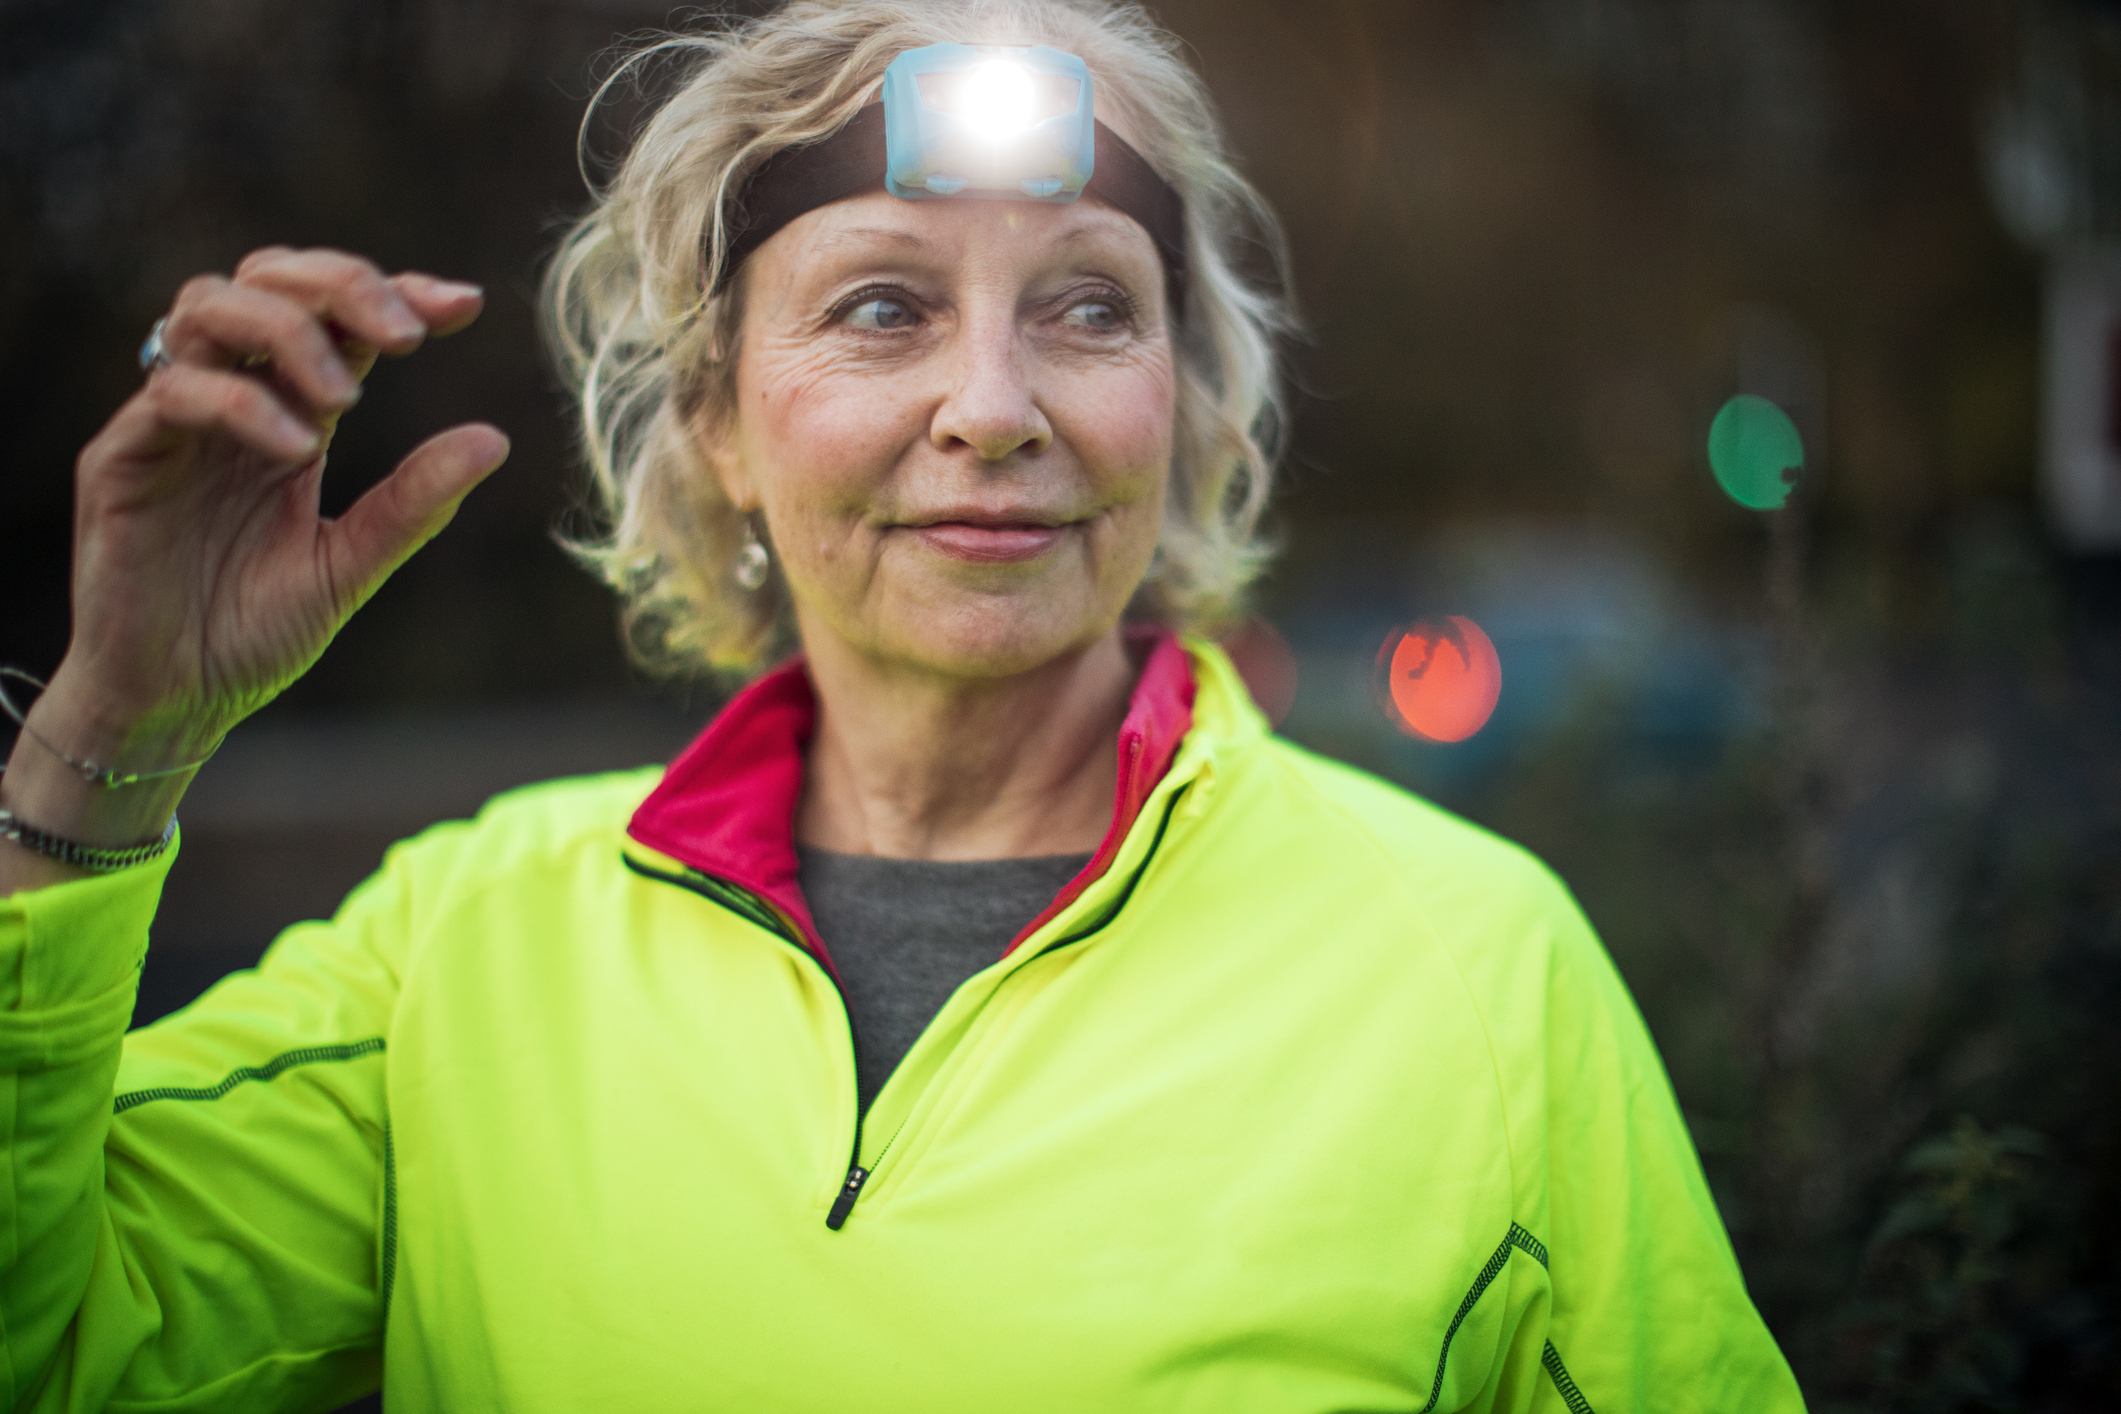 Brustlampe oder Stirnlampe beim Nordic Walking 